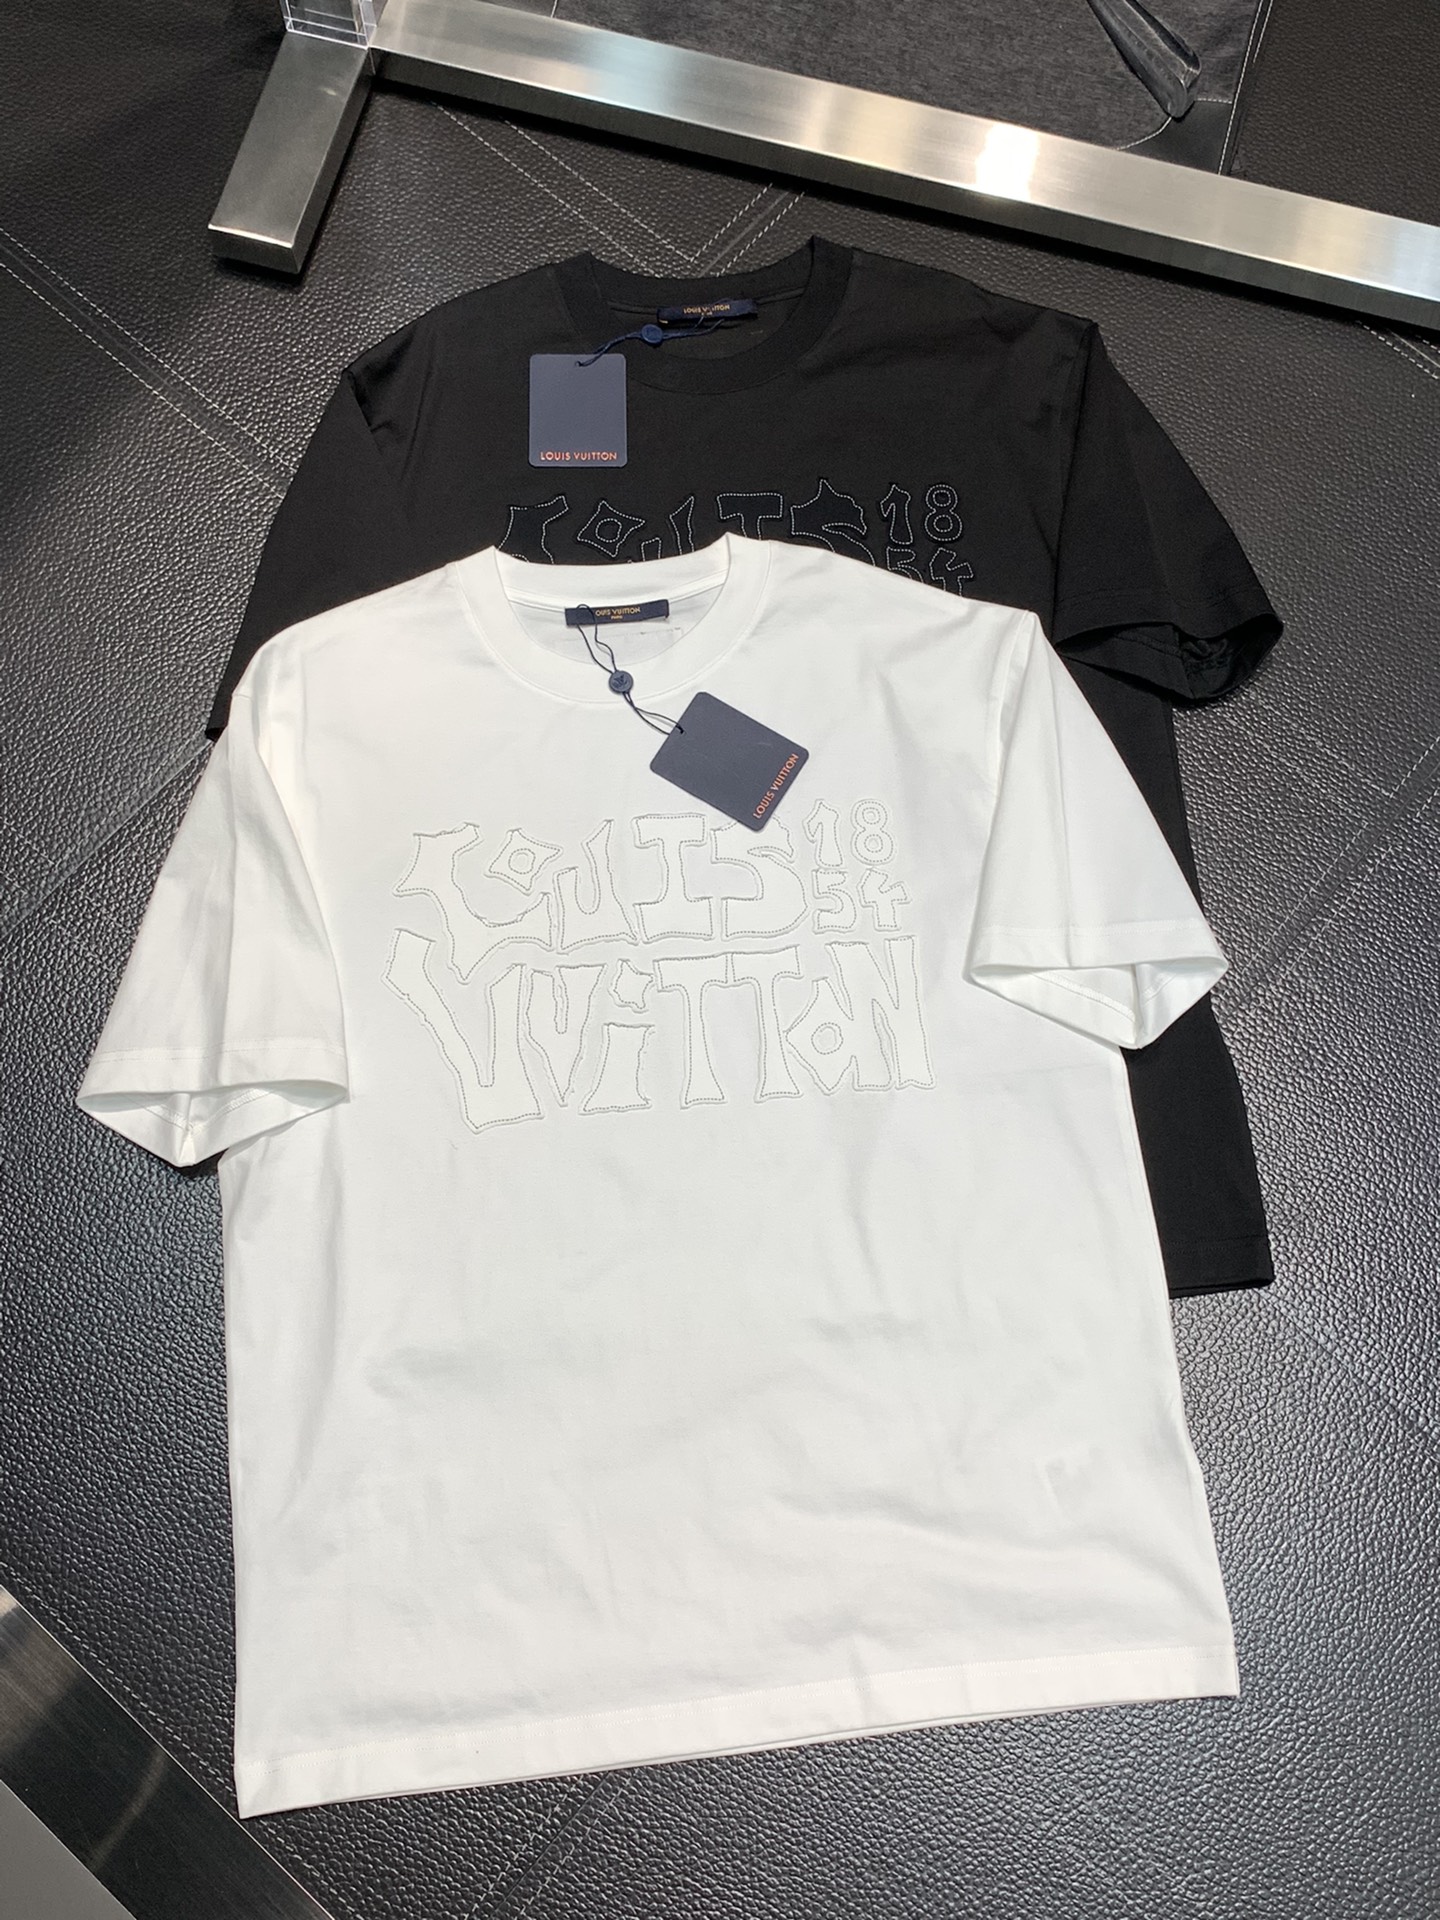 Louis Vuitton Clothing T-Shirt Men Fashion Short Sleeve